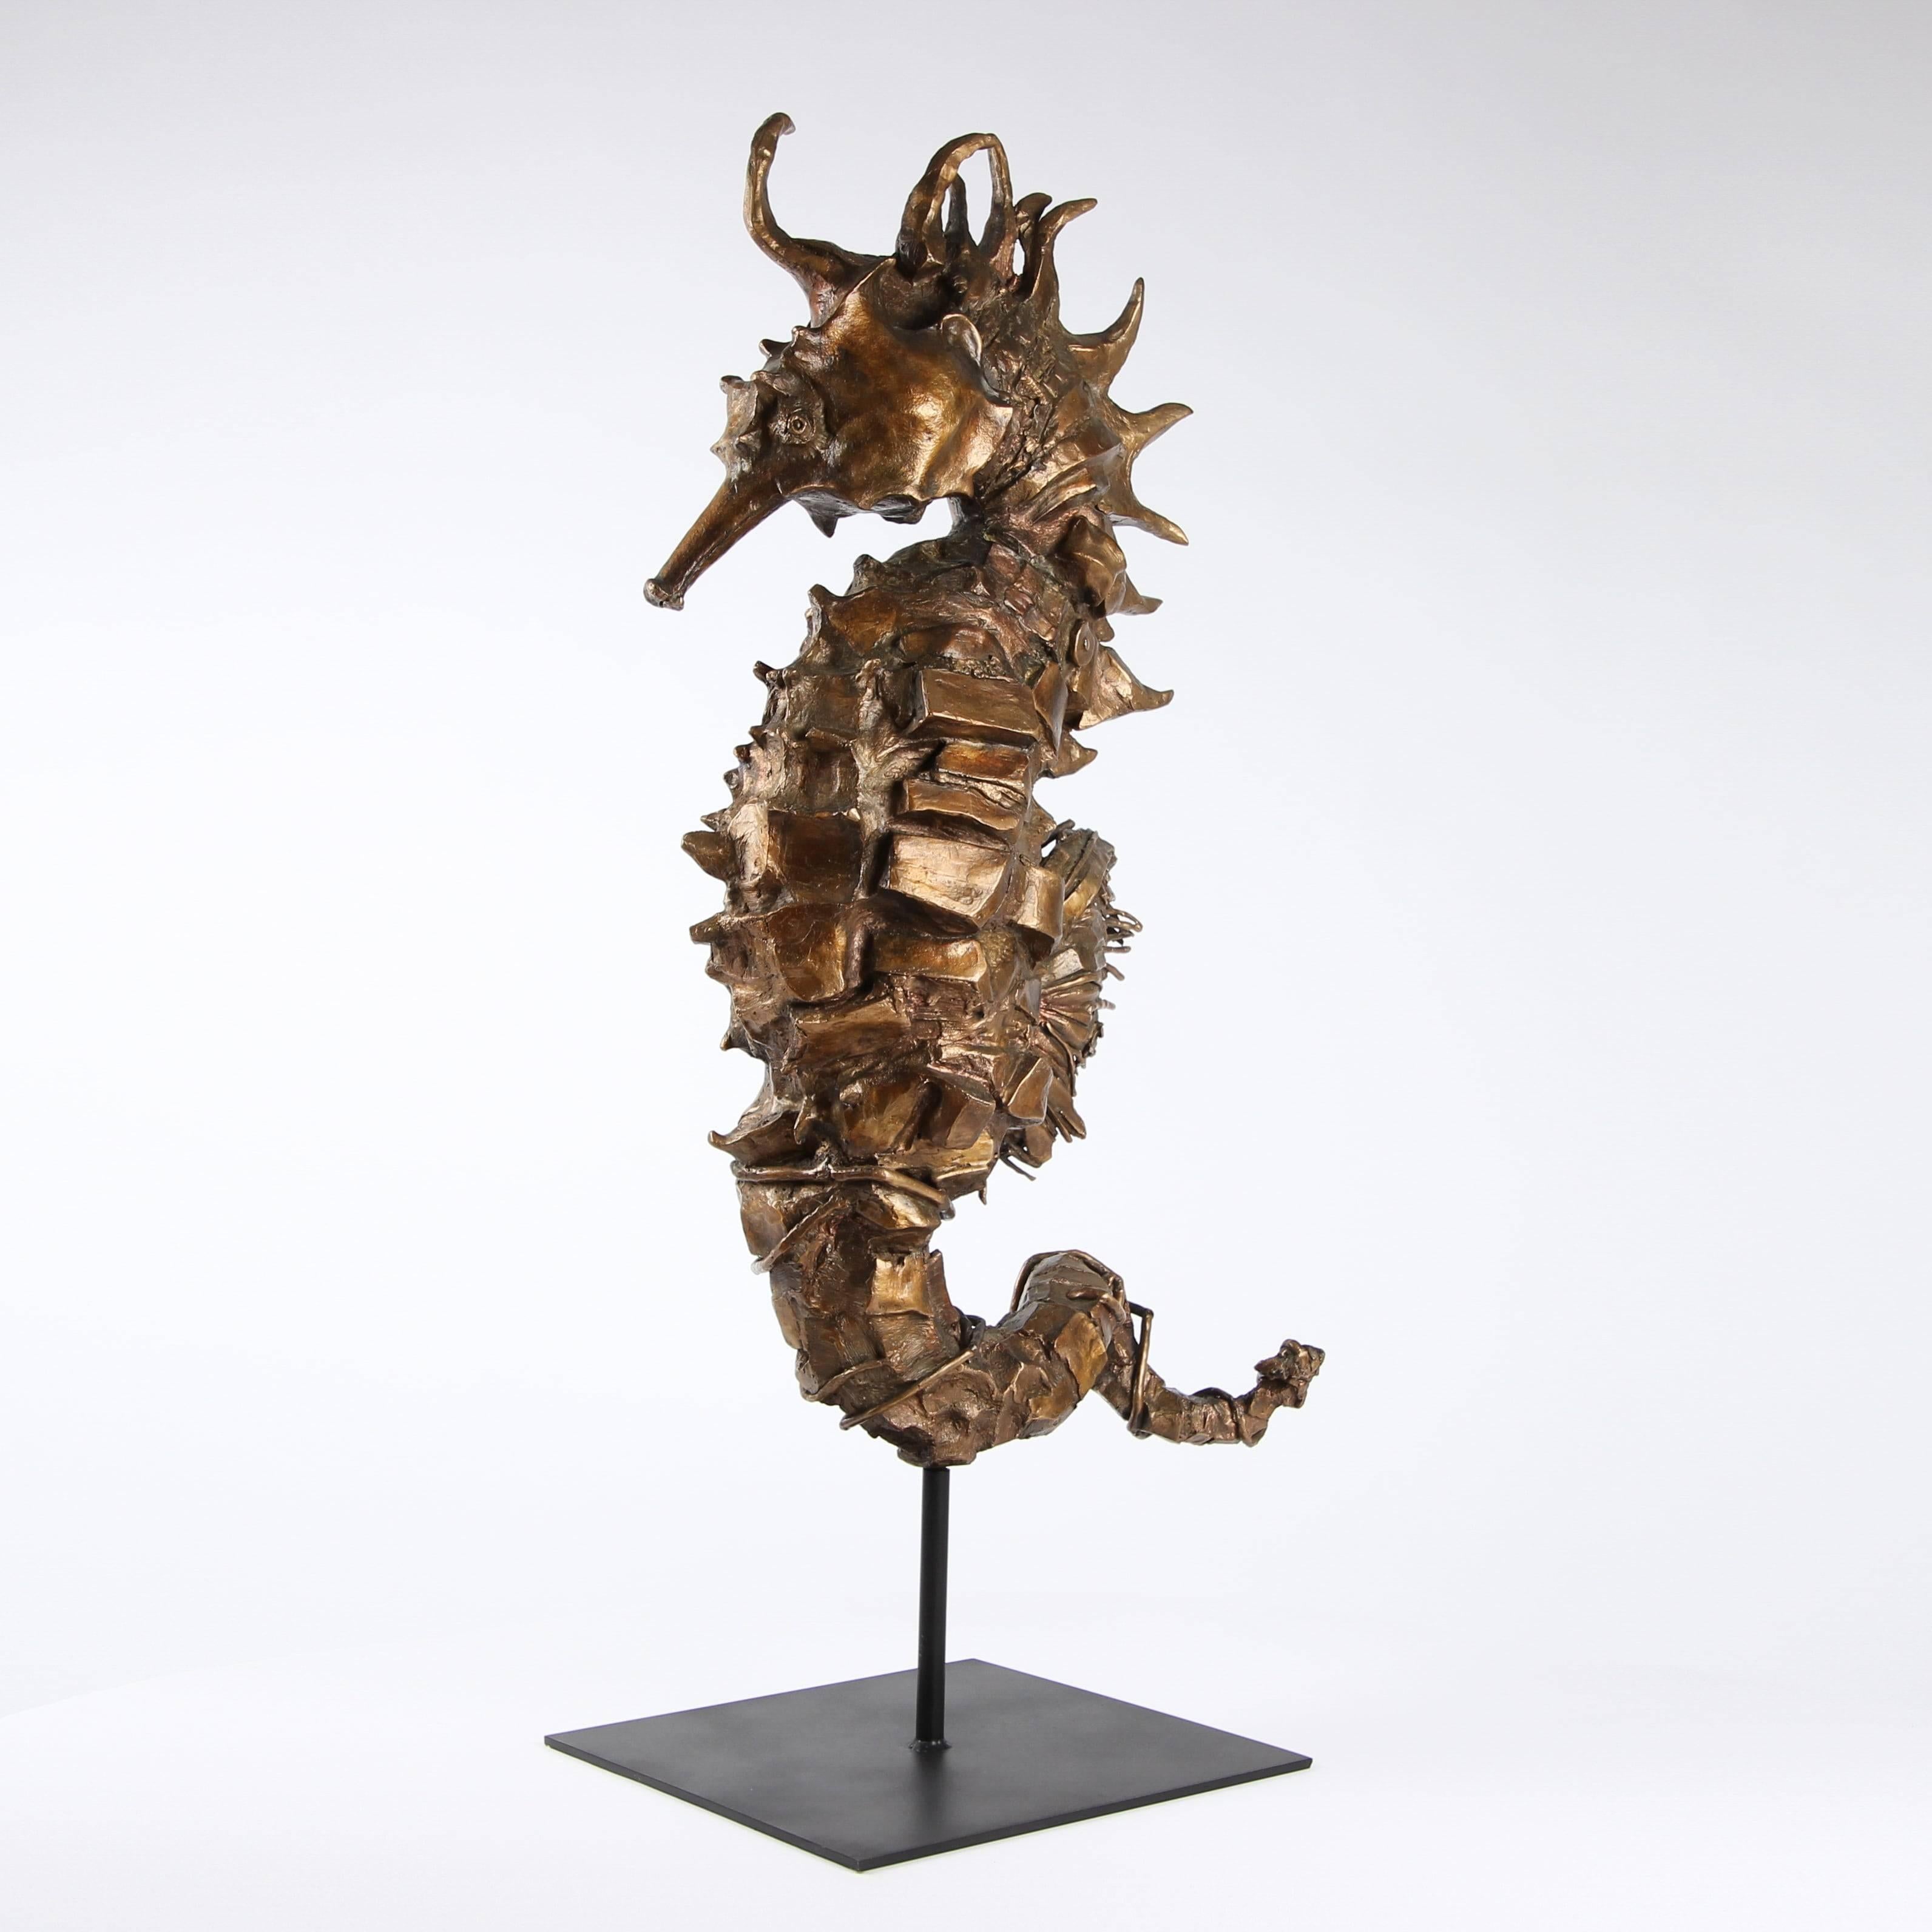 Seahorse Rex Gold by Chésade - Sealife bronze sculpture For Sale 2